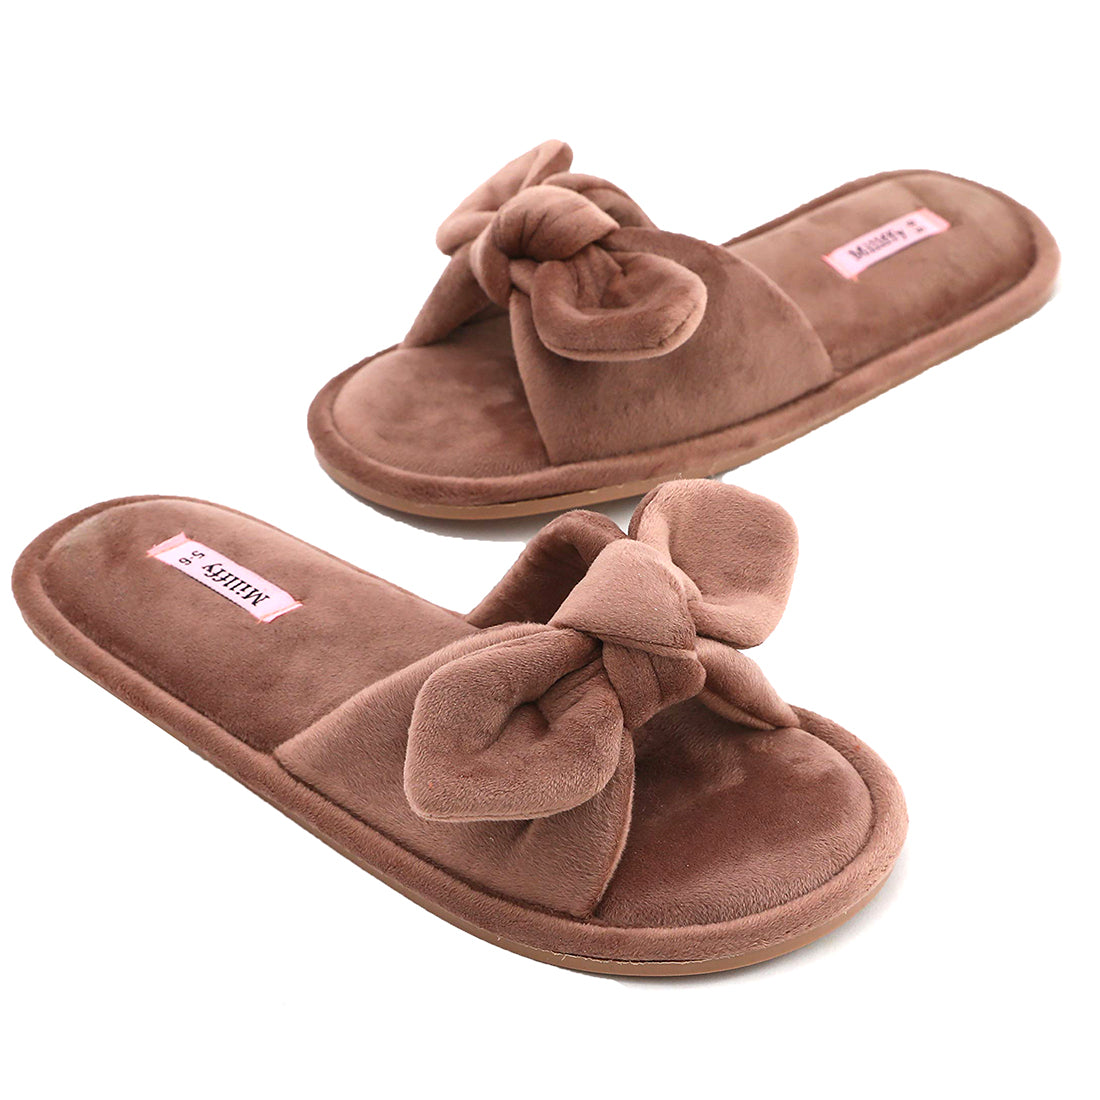 Millffy Ladies Girls summer slippers for womens bedroom slippers bows comfies slippers kawaii Slides